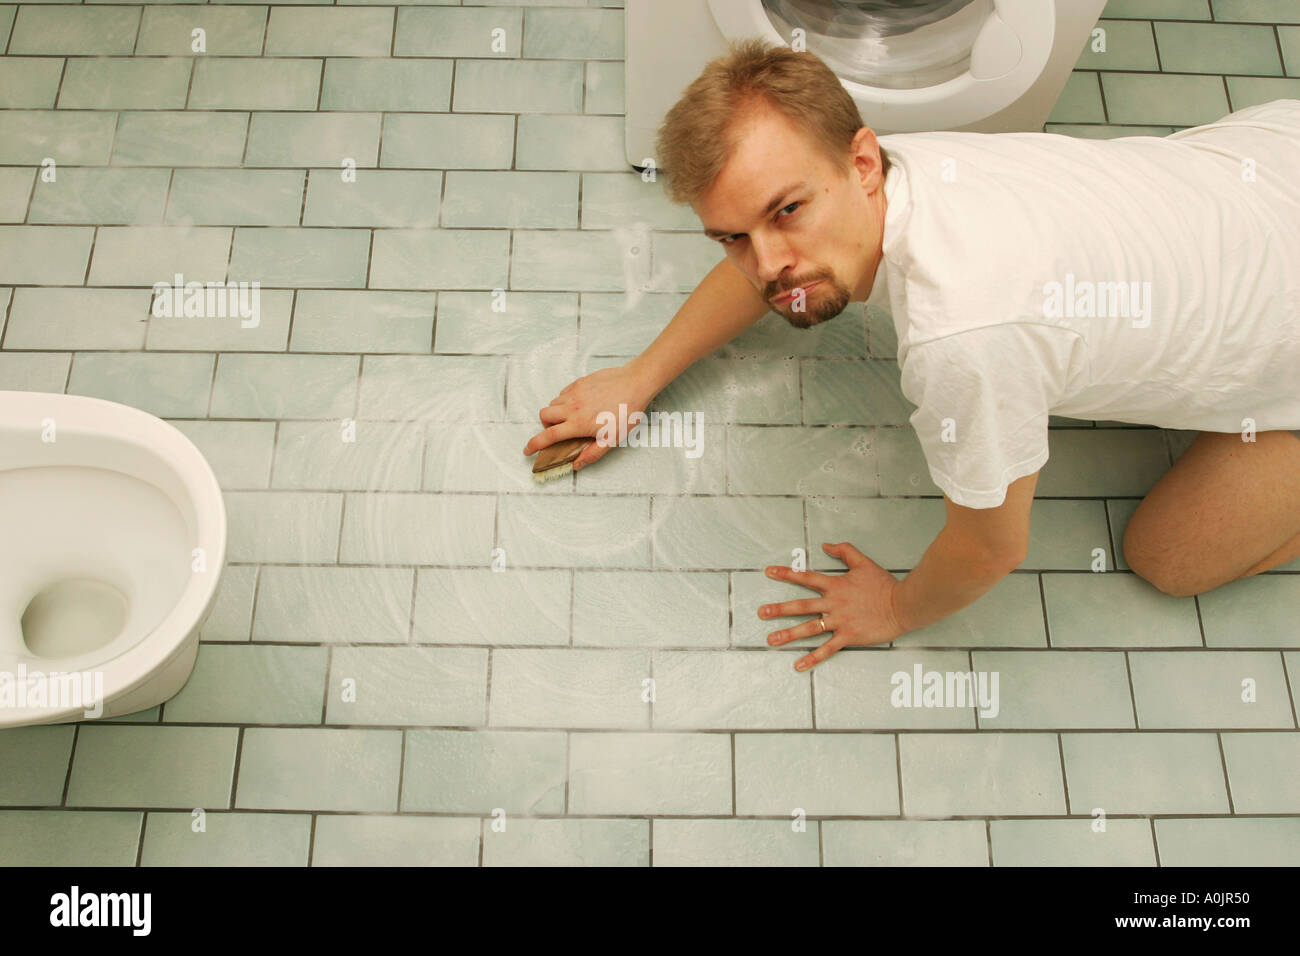 Grumpy man, 35 years old, scrubbing the bathroom floor, standing on his knees Stock Photo